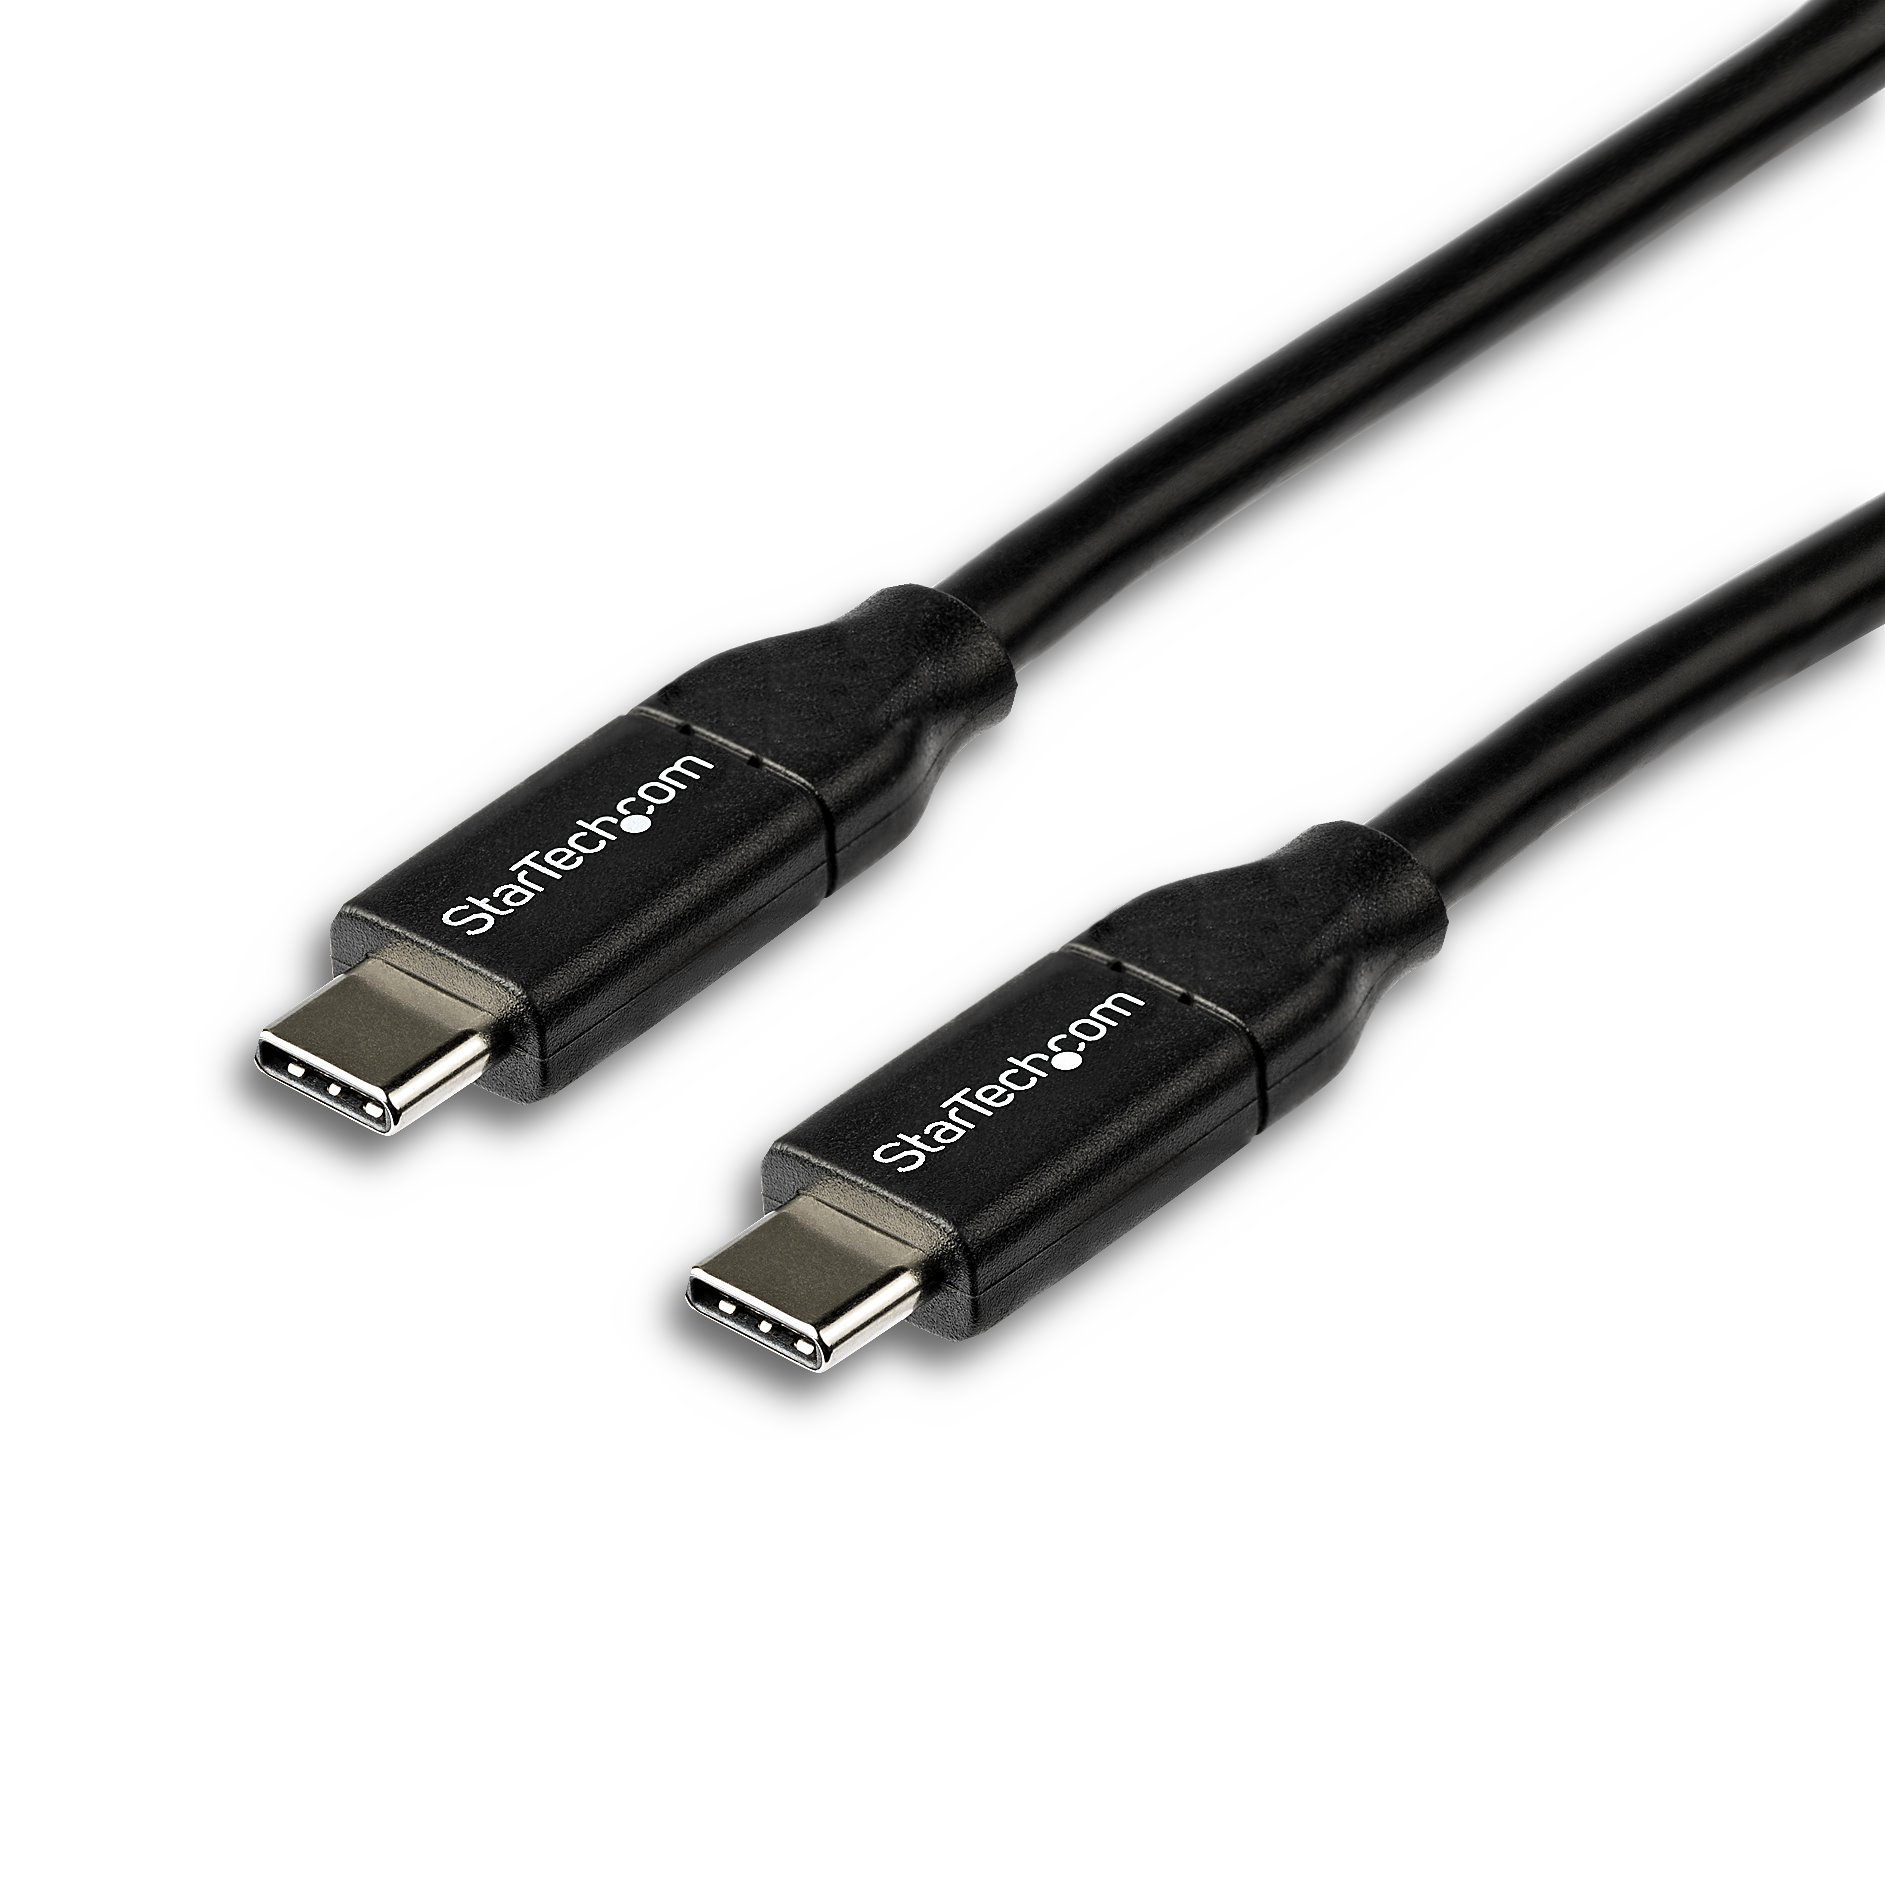 StarTech.com 2m 6ft USB C to USB B Cable